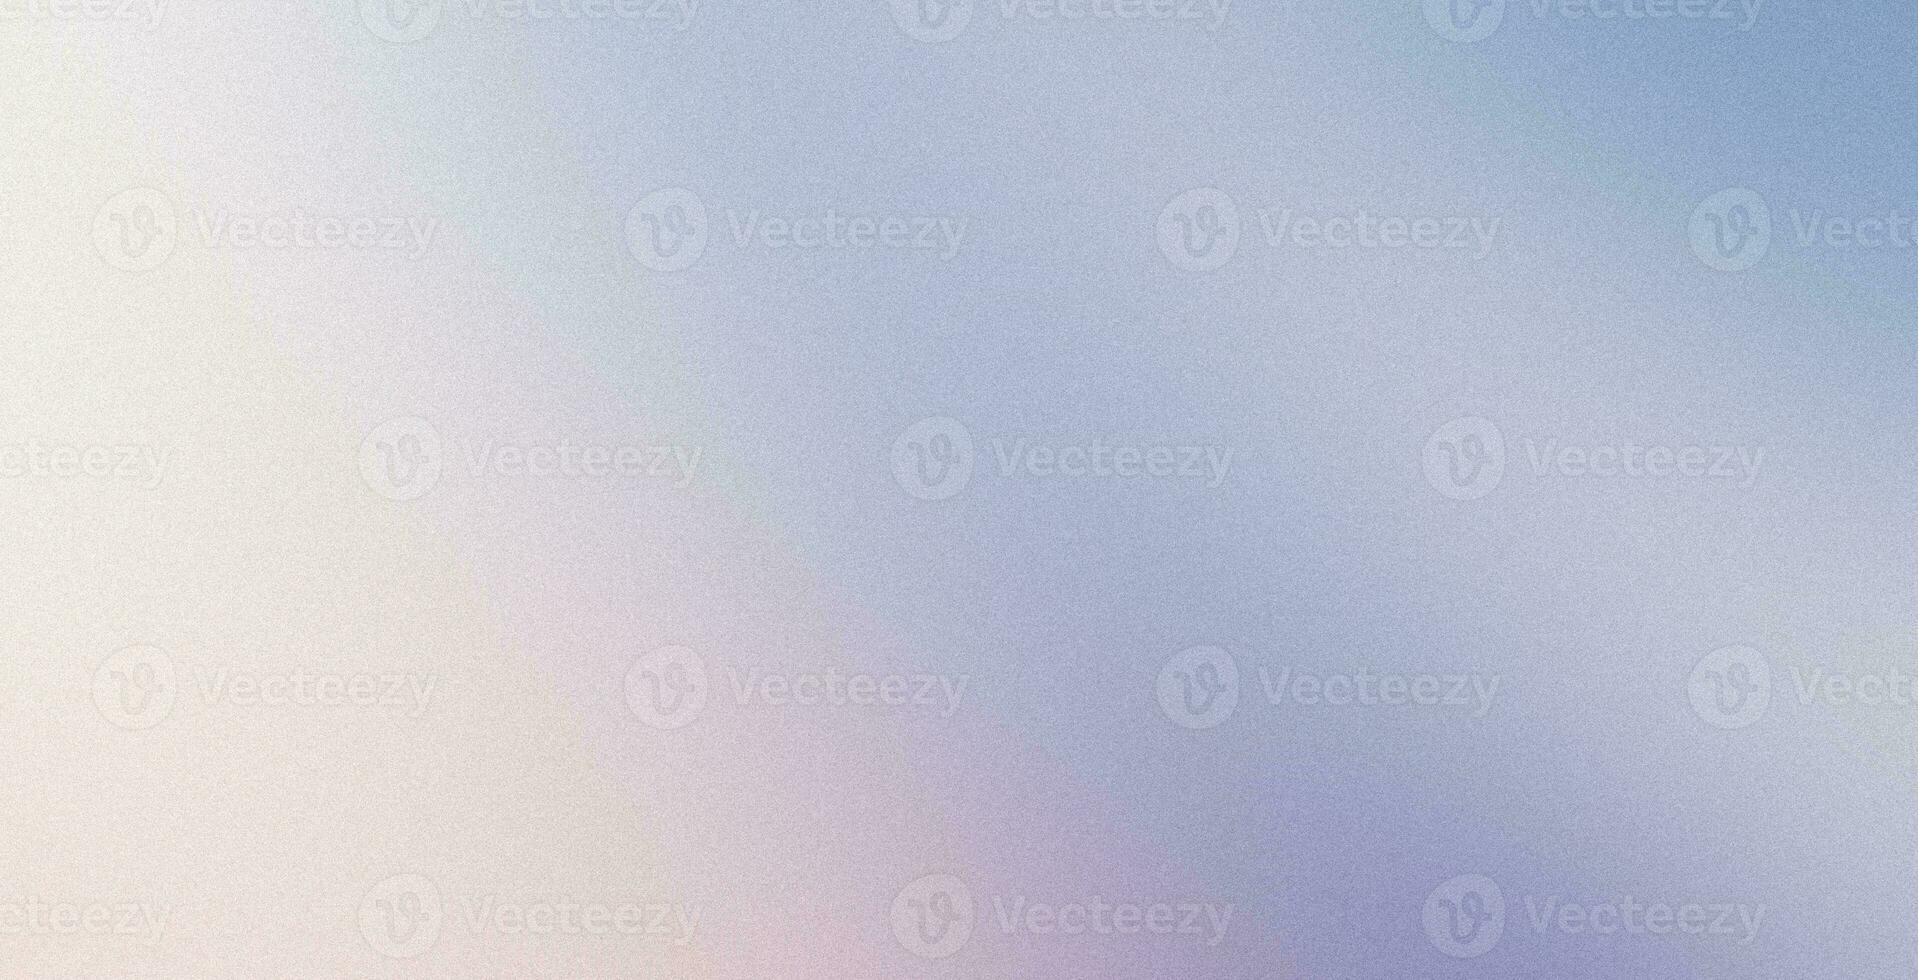 Purple beige pastel grainy gradient background poster backdrop noise texture webpage header wide banner design photo